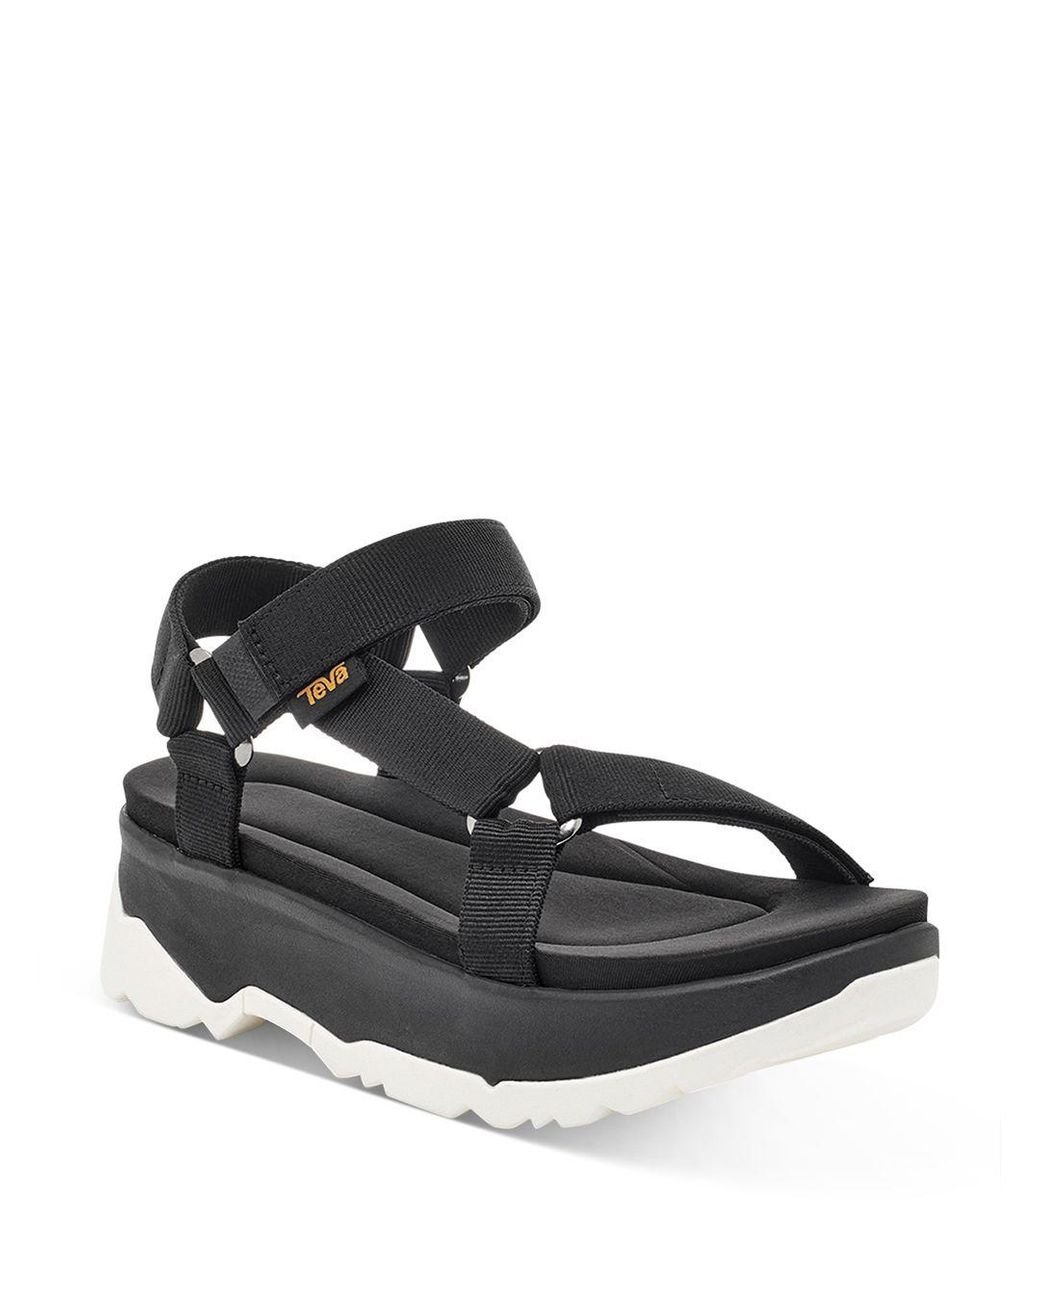 Teva Synthetic Jadito Universal Strappy Platform Sandals in Black - Lyst